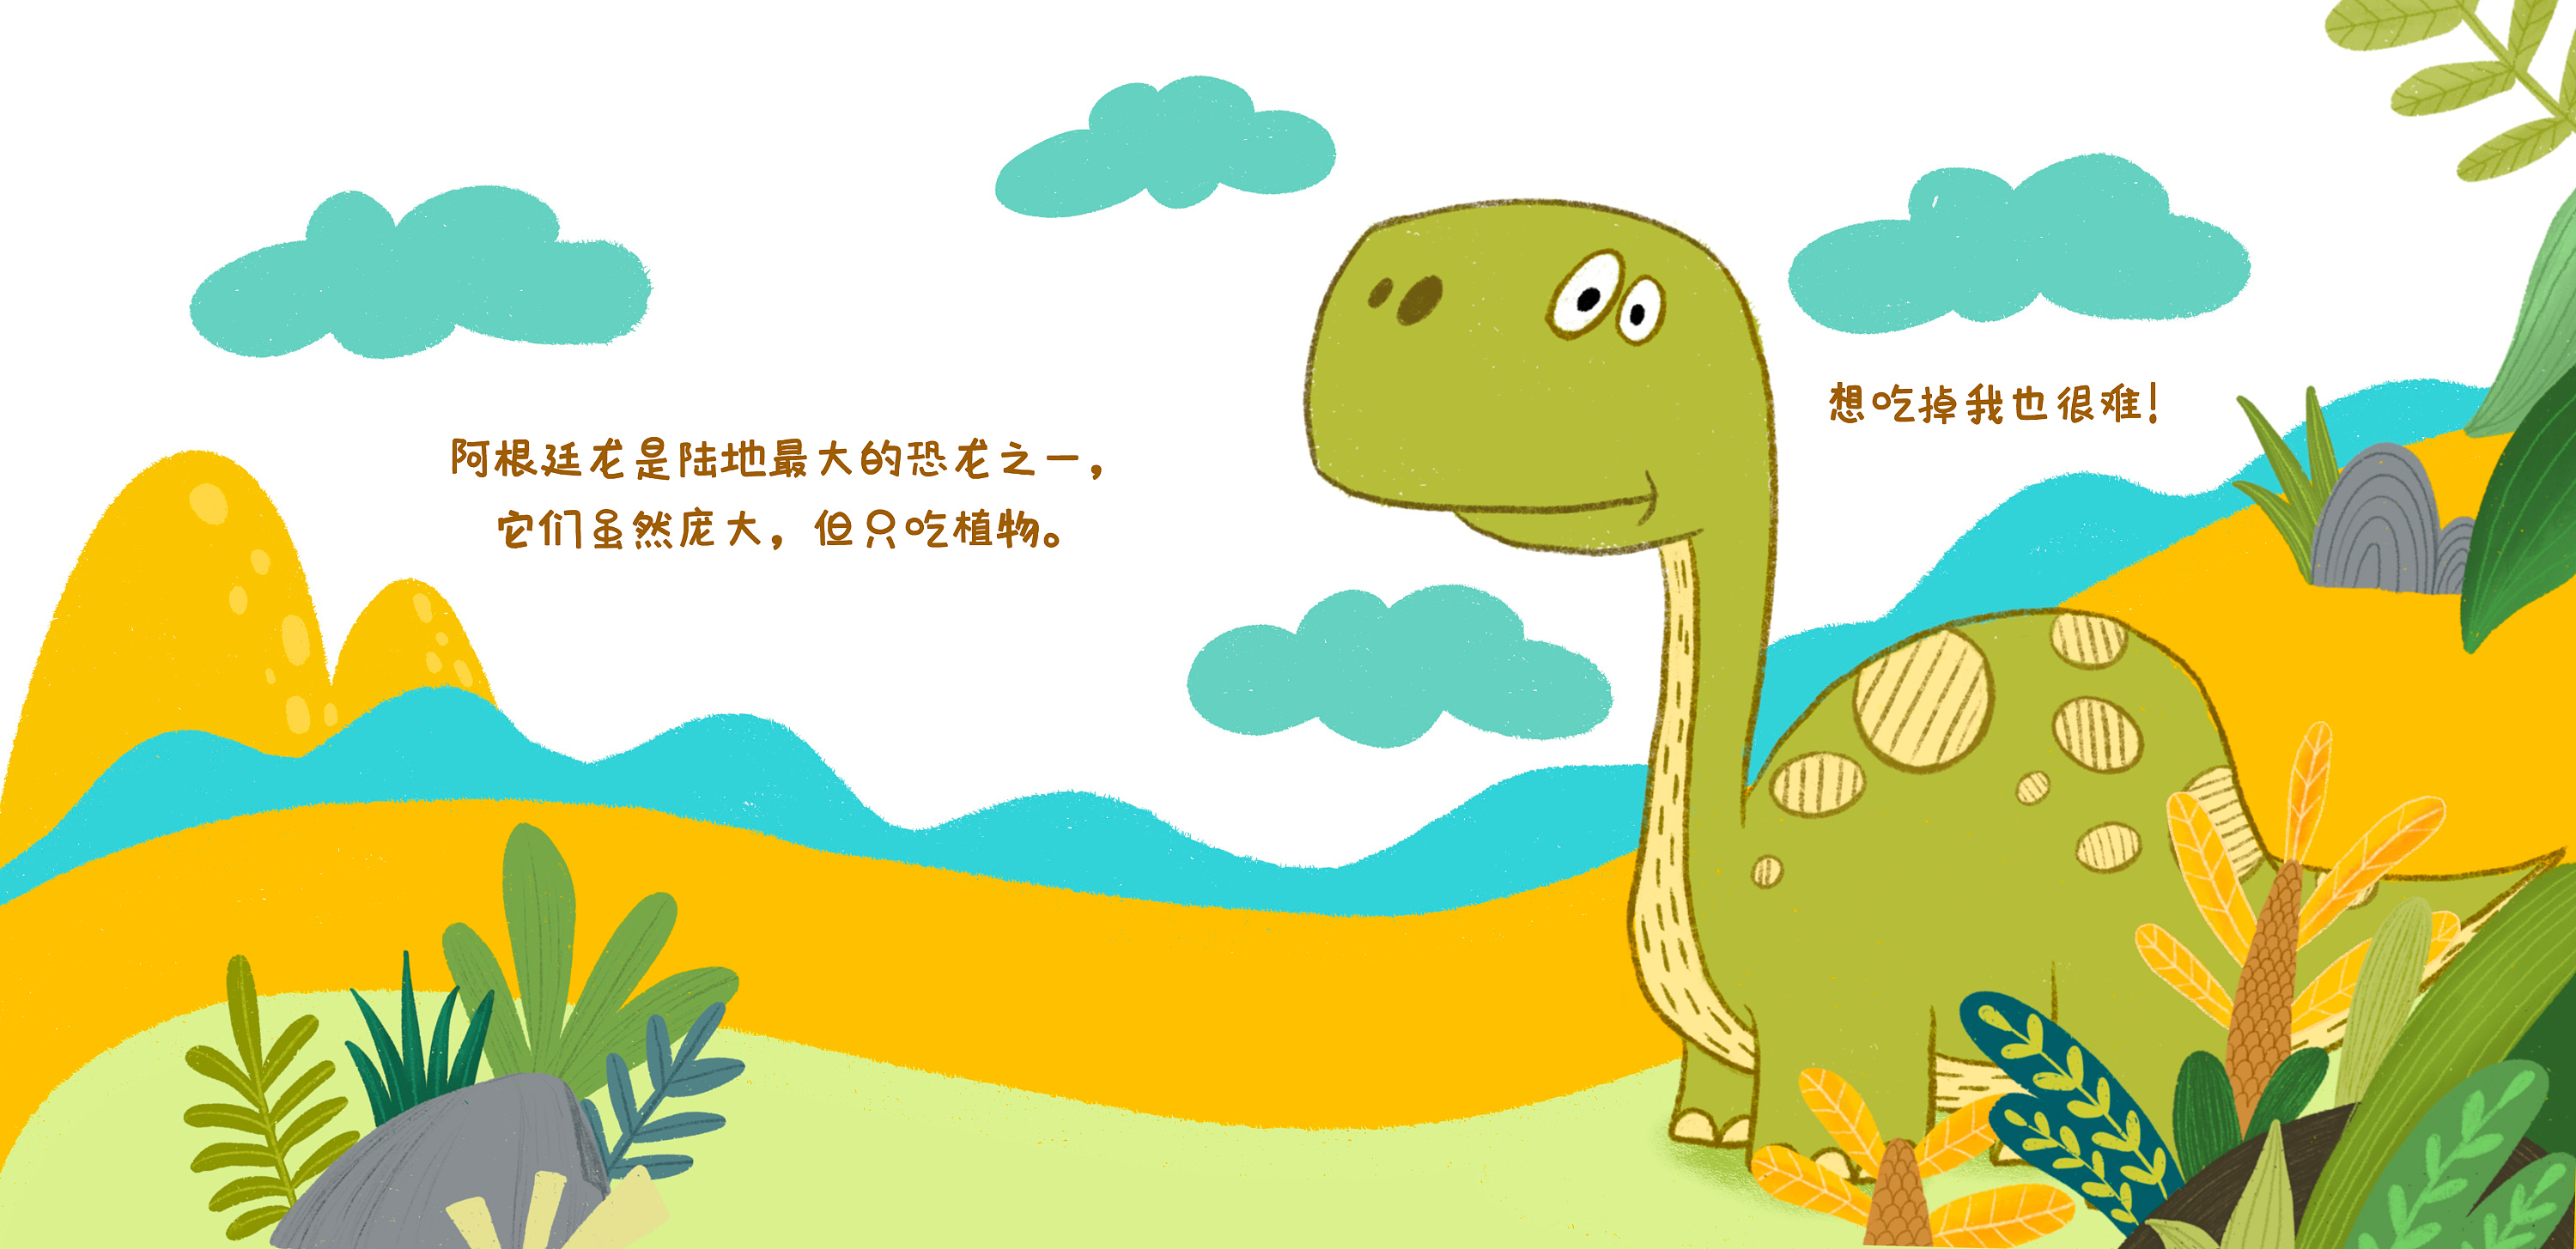 【Super Simple Songs英文儿歌】10 Little Dinosaurs 十只小恐龙_哔哩哔哩 (゜-゜)つロ 干杯~-bilibili